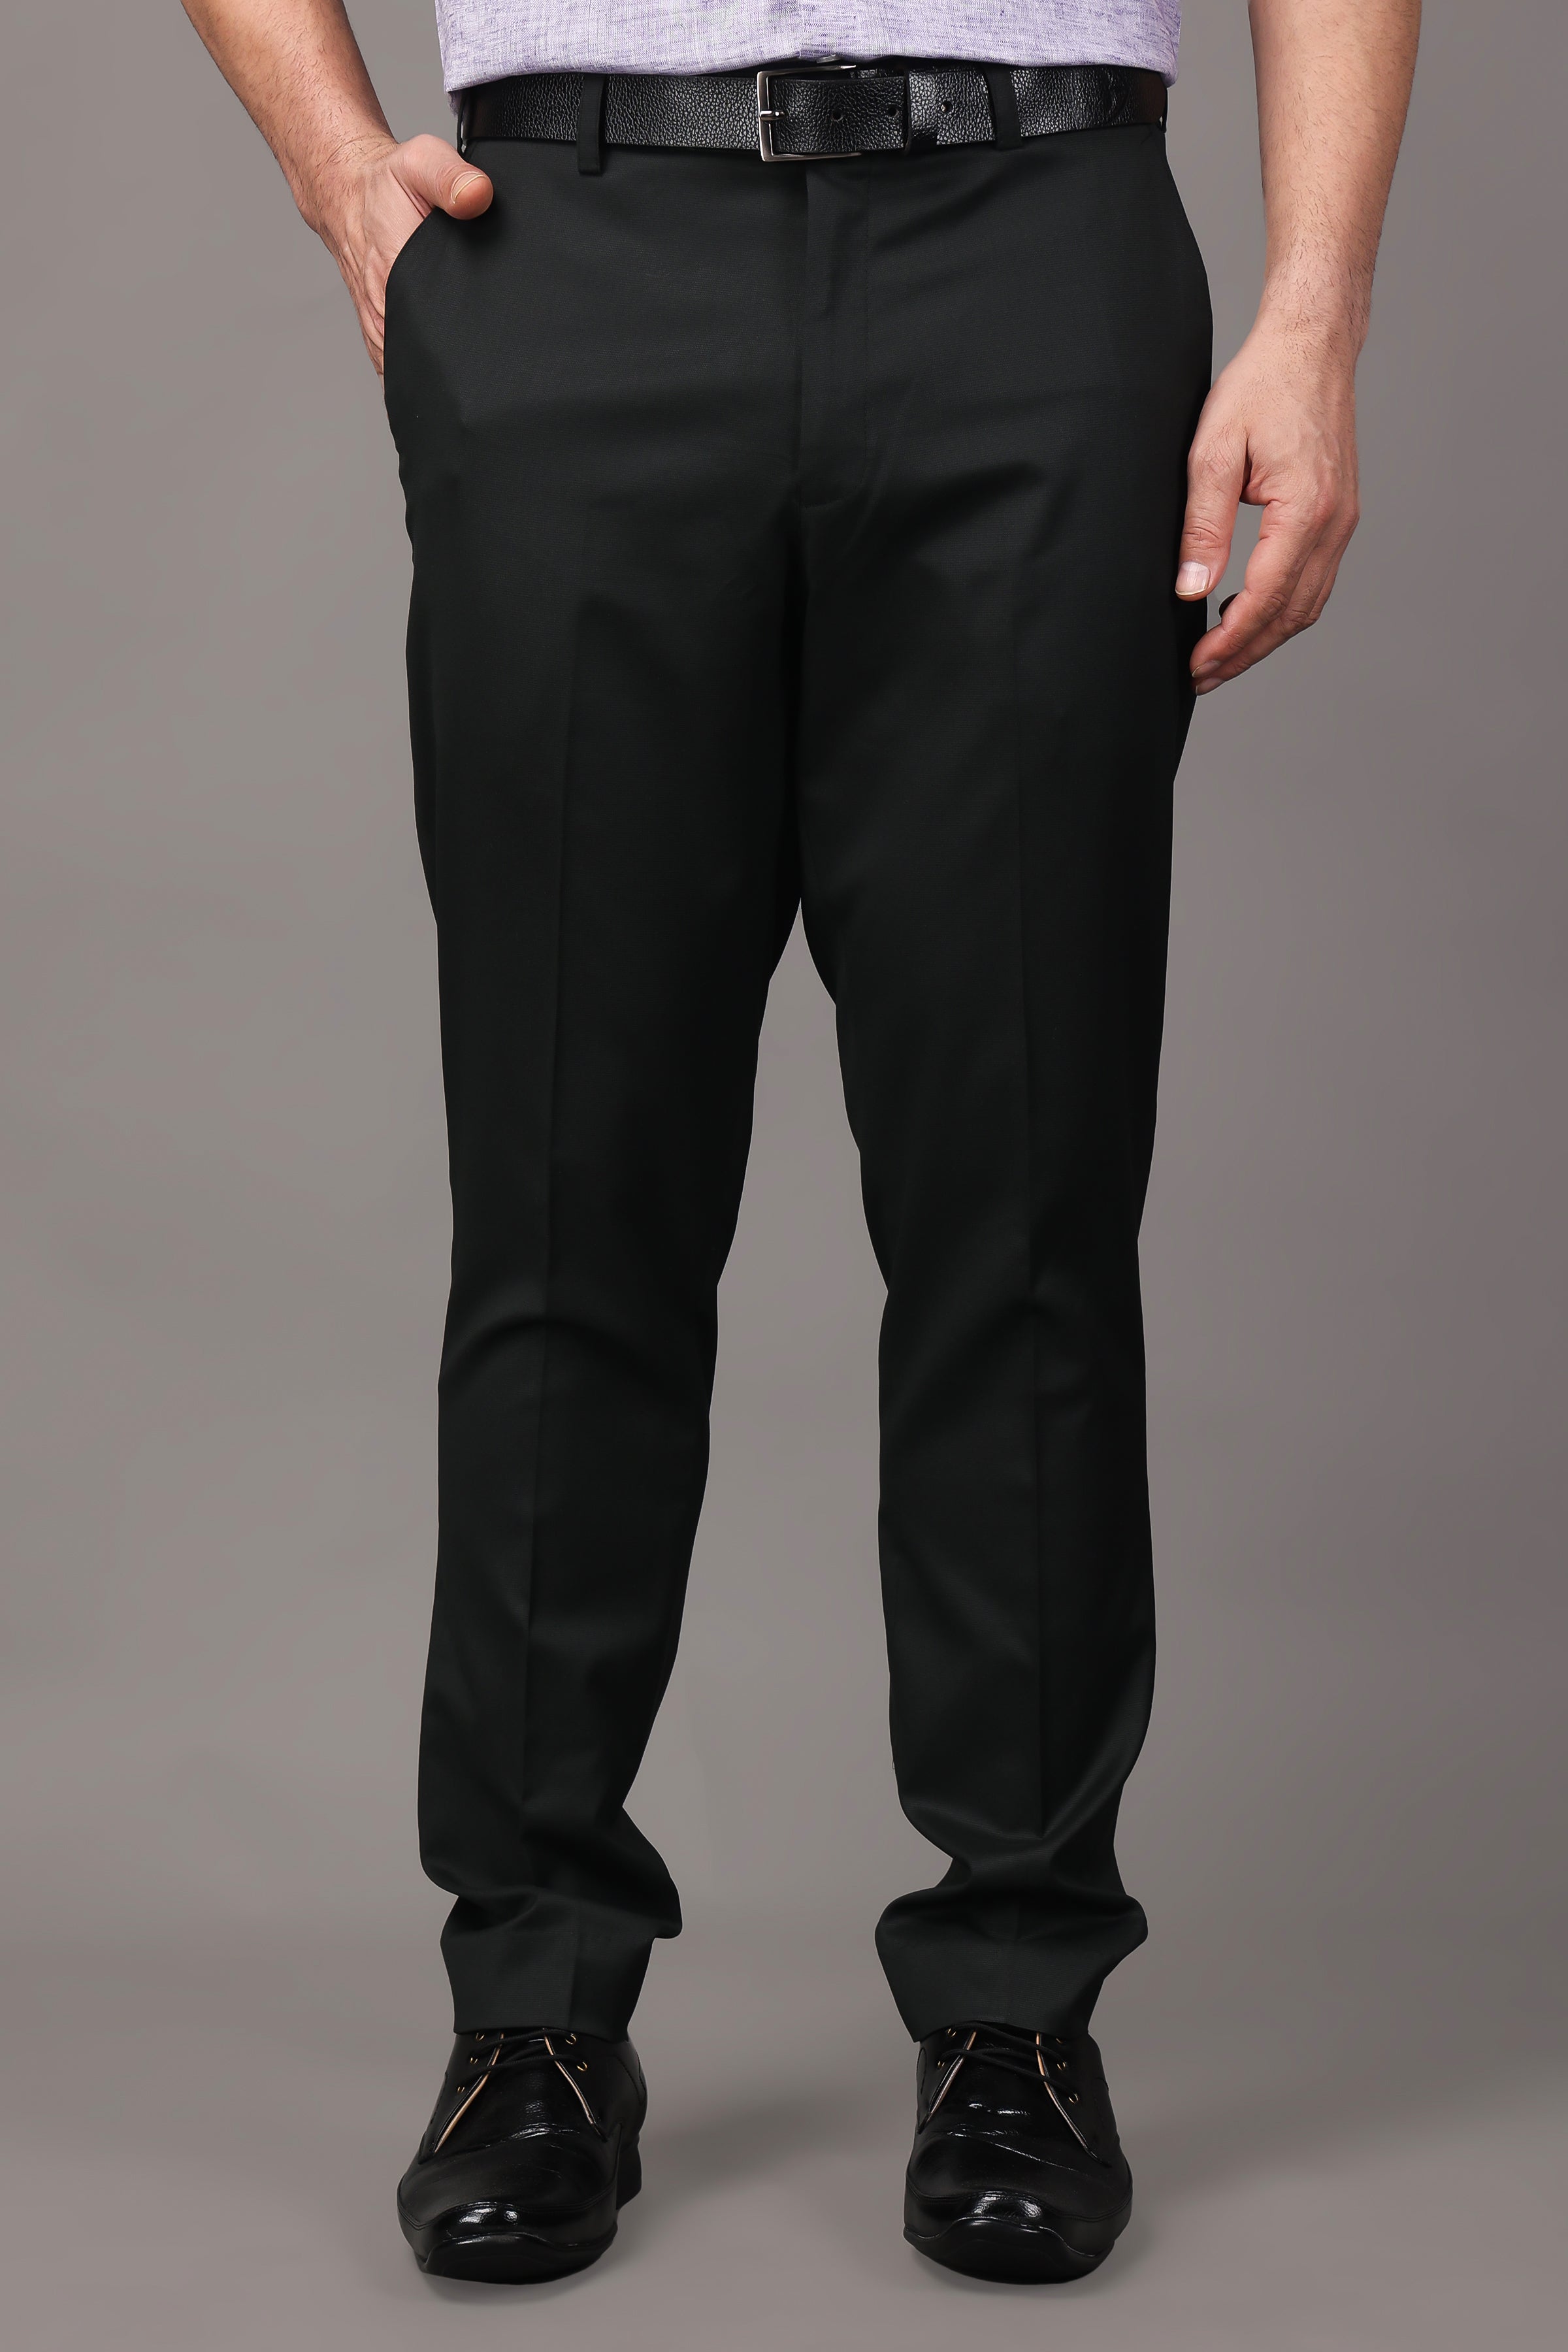 Uniform Pants | Hotel | Restaurant | Casino